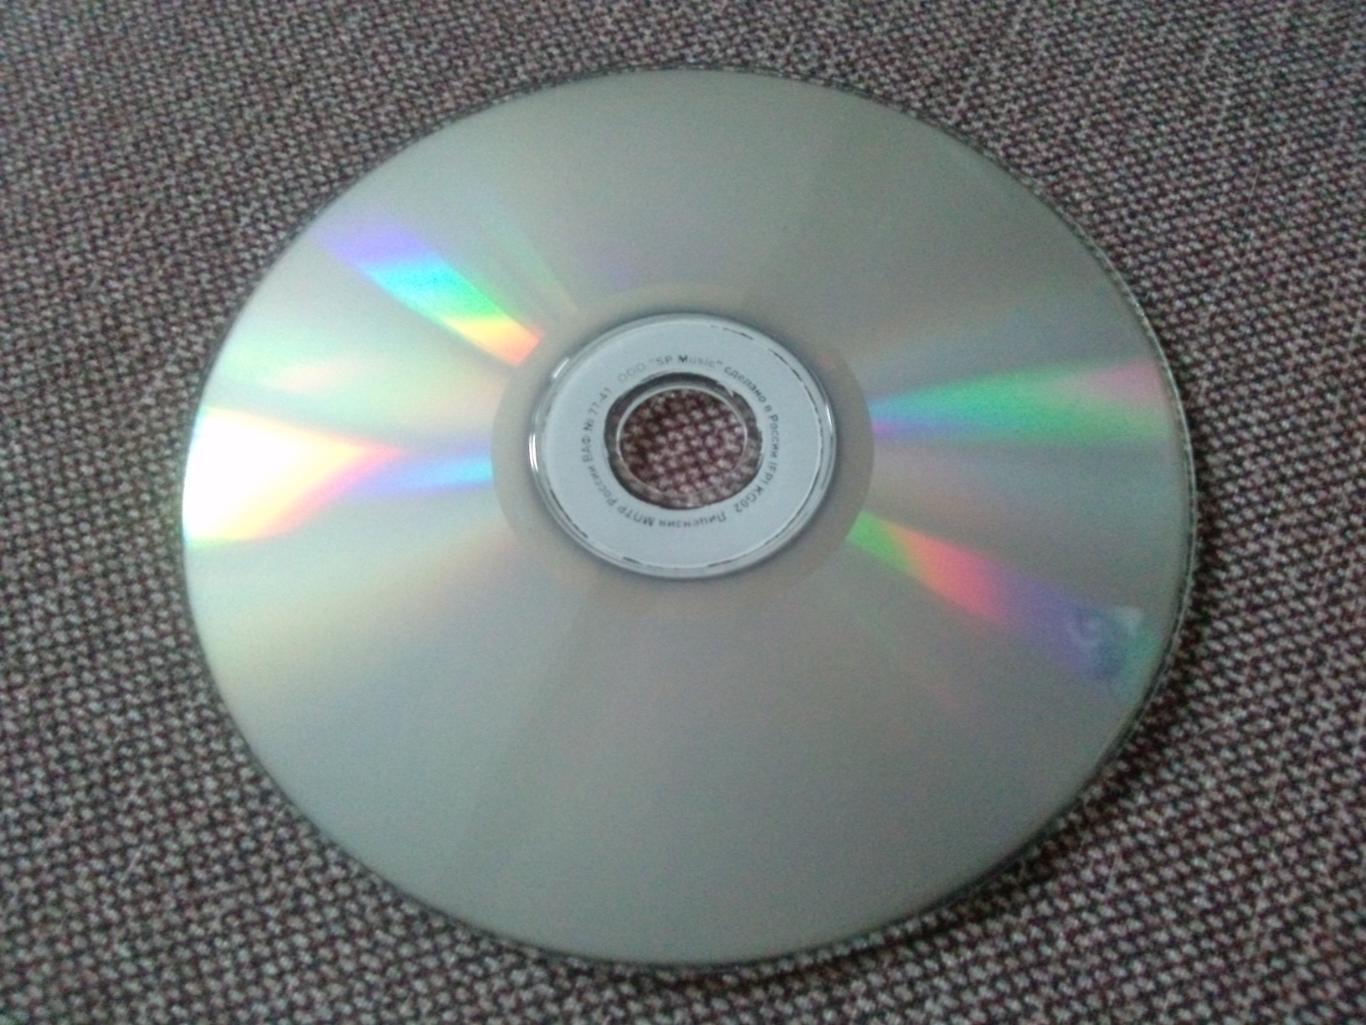 MP - 3 CD диск : группаАукцыон13 альбомов (Русская рок - музыка) 3